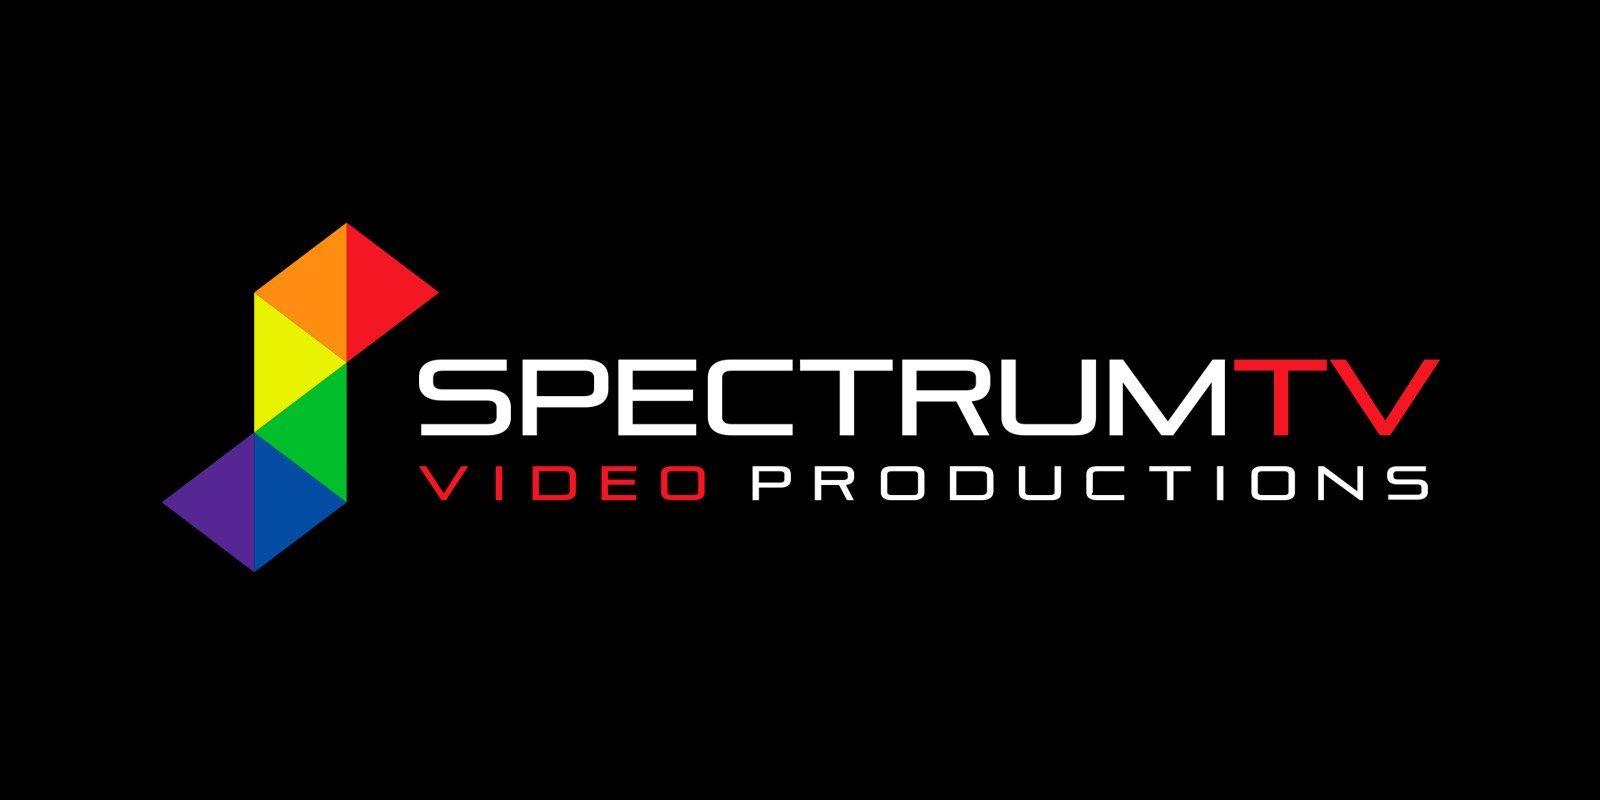 Spectrum TV Logo - Spectrum TV Video Productions Logo TV Video Productions